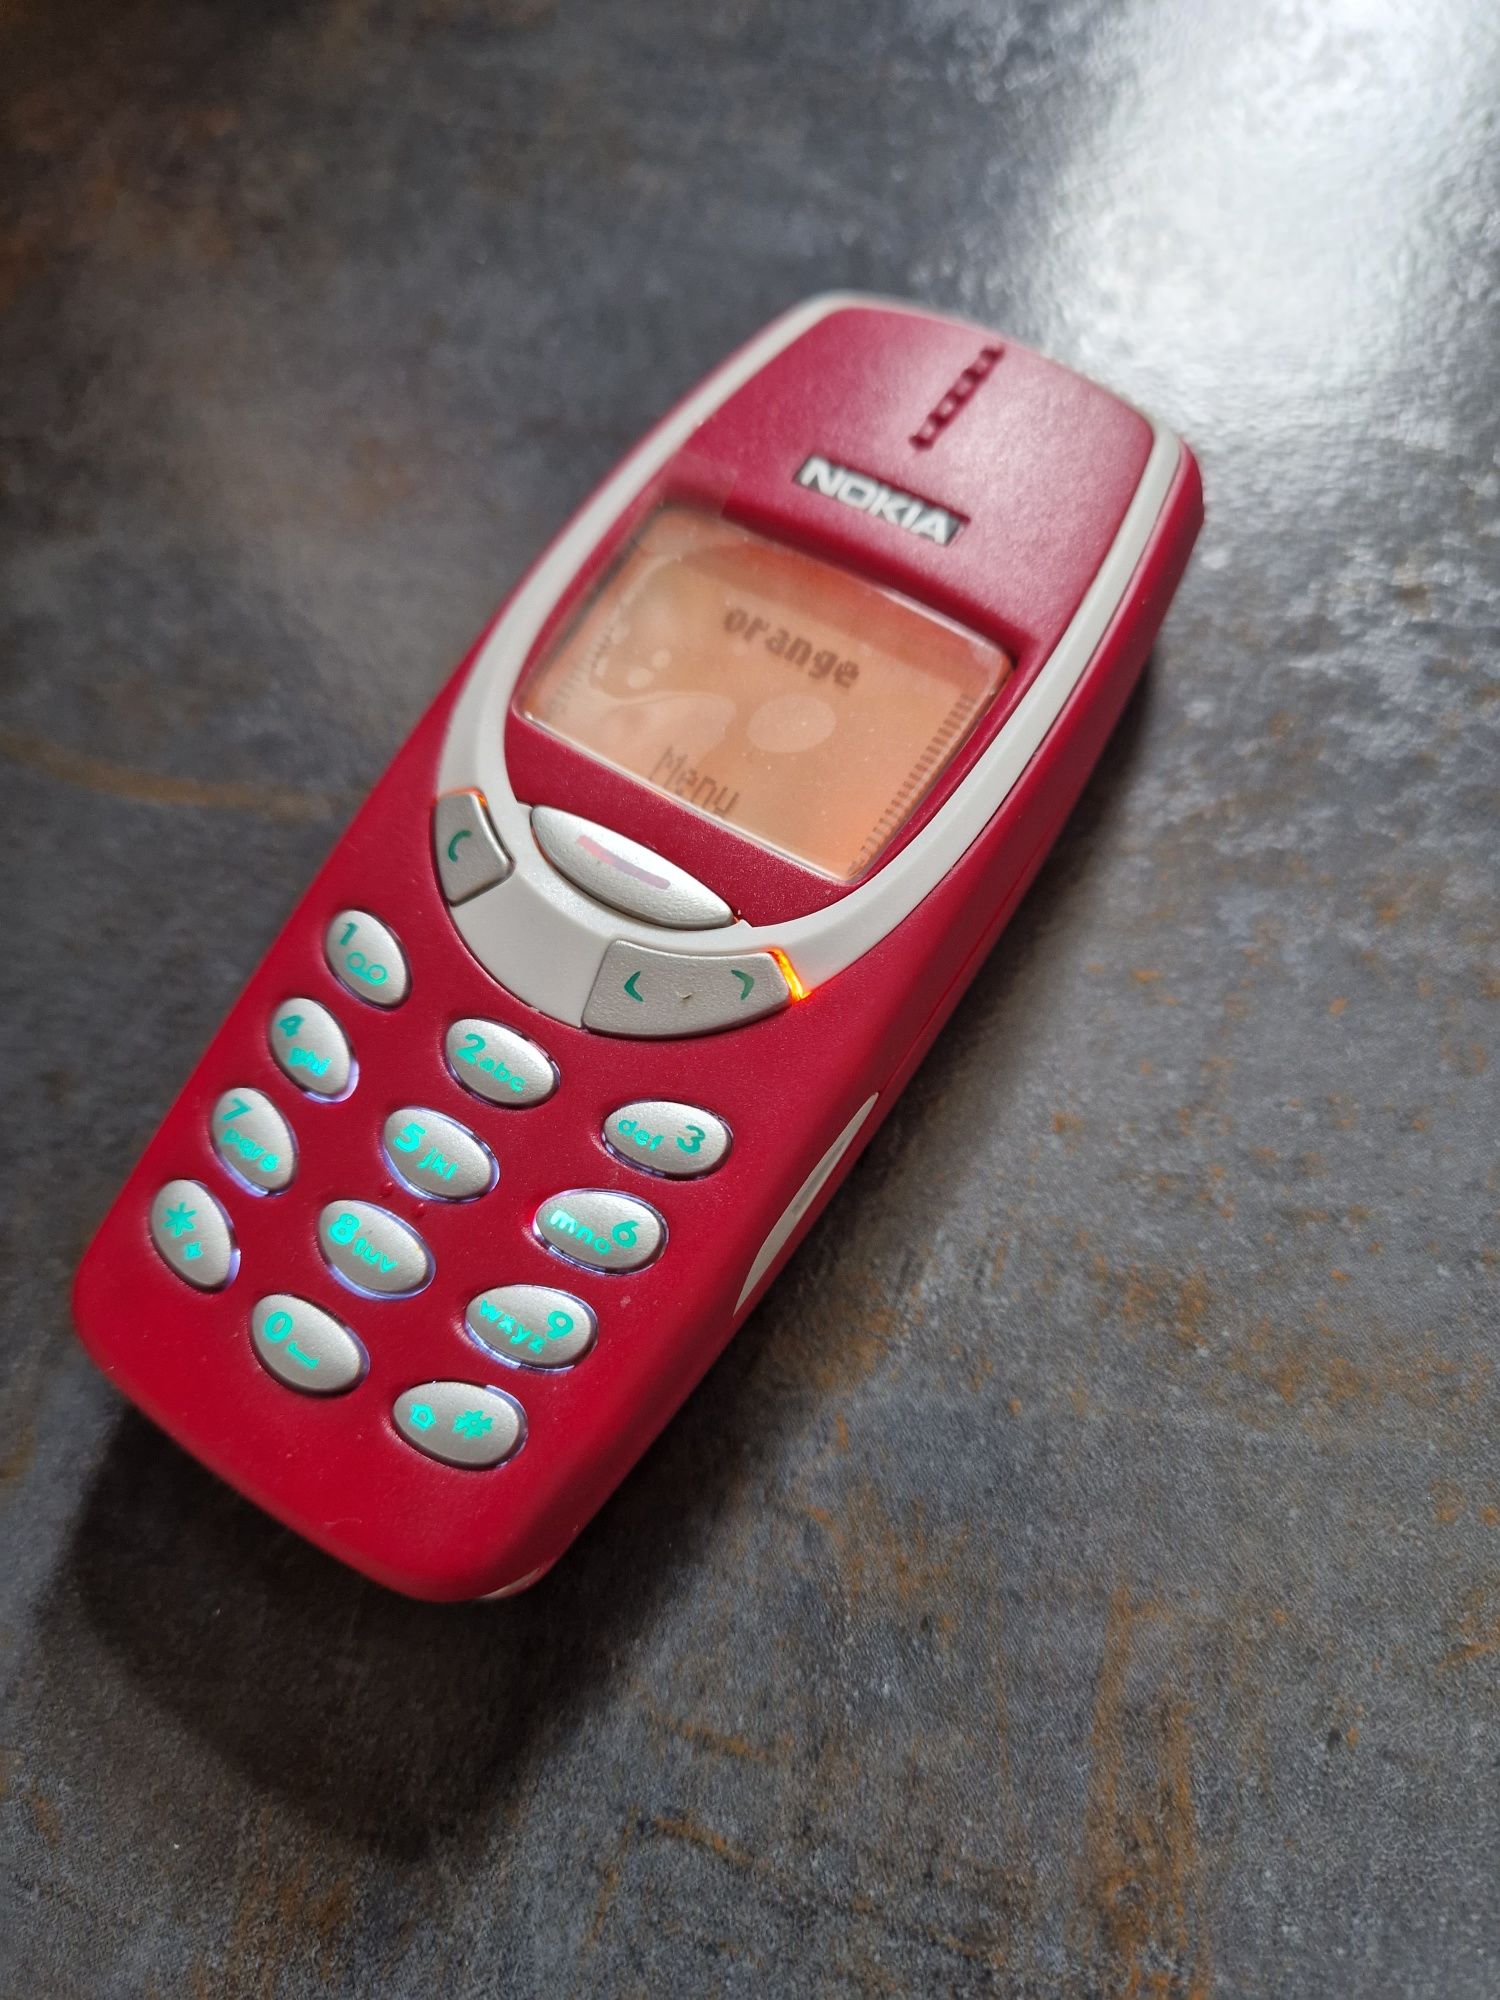 Nokia 3310 cu Wireless Charging, LEDS & Software MOD